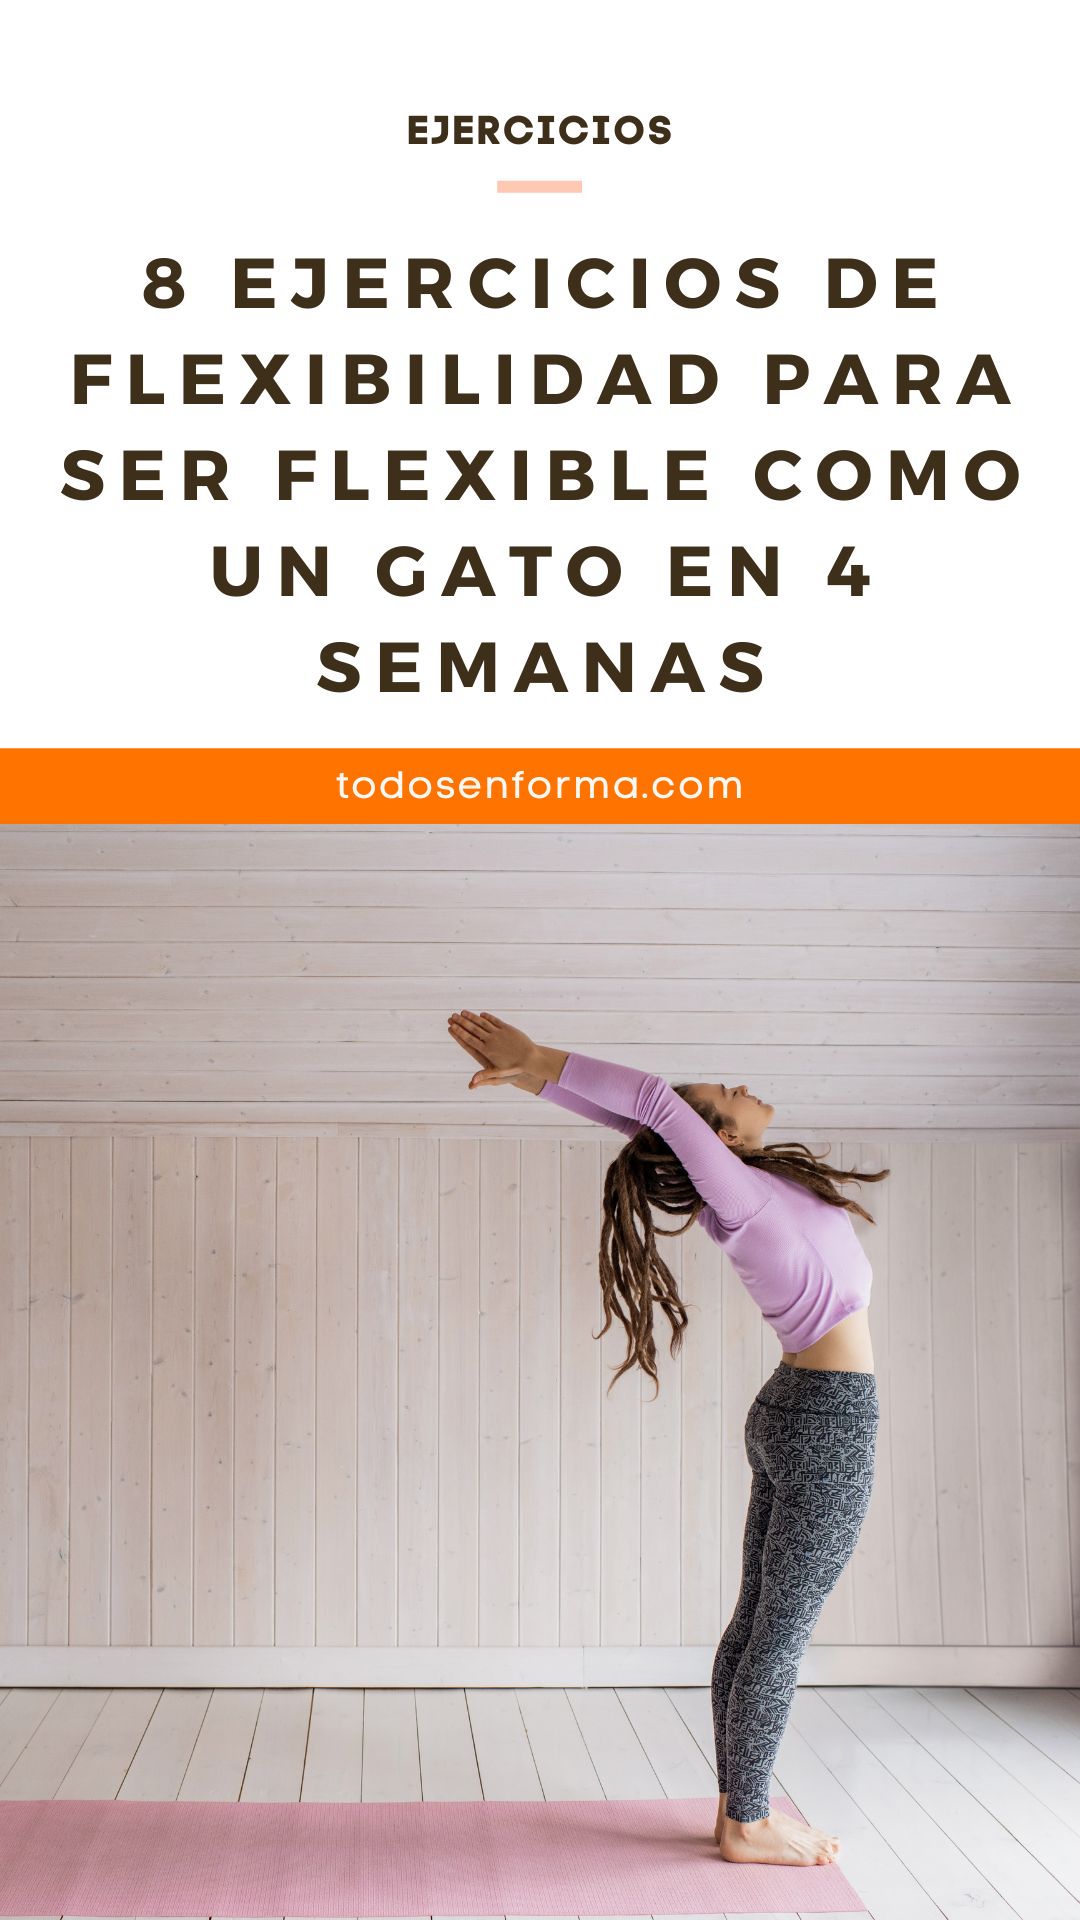 8 ejercicios de flexibilidad para ser flexible como un gato en 4 semanas